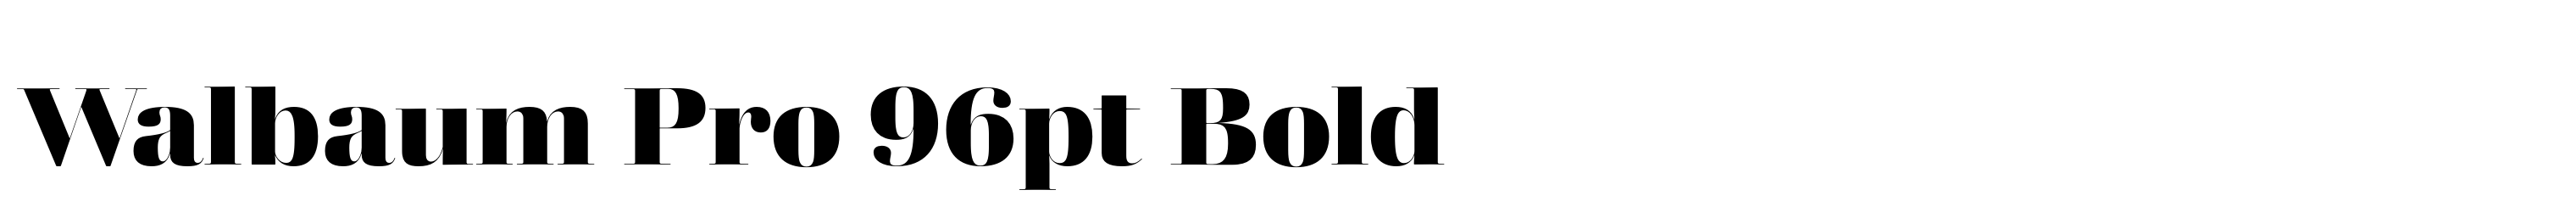 Walbaum Pro 96pt Bold